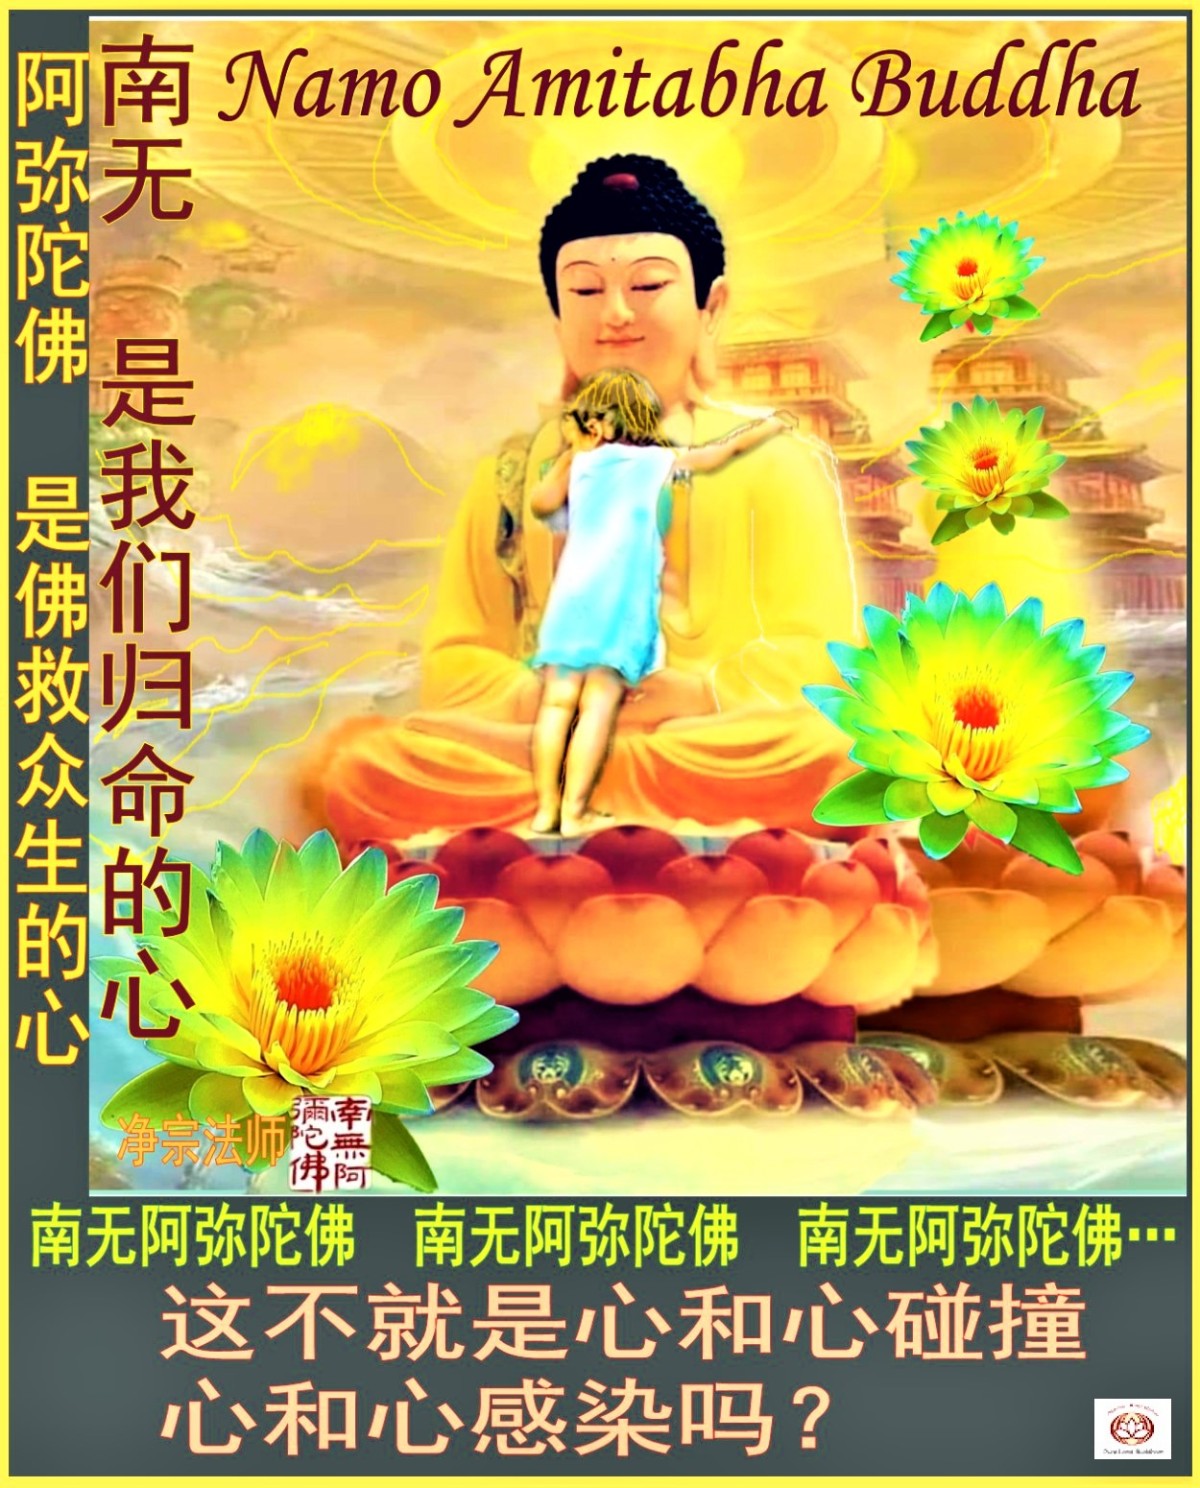 Link up with Amitabha Buddha